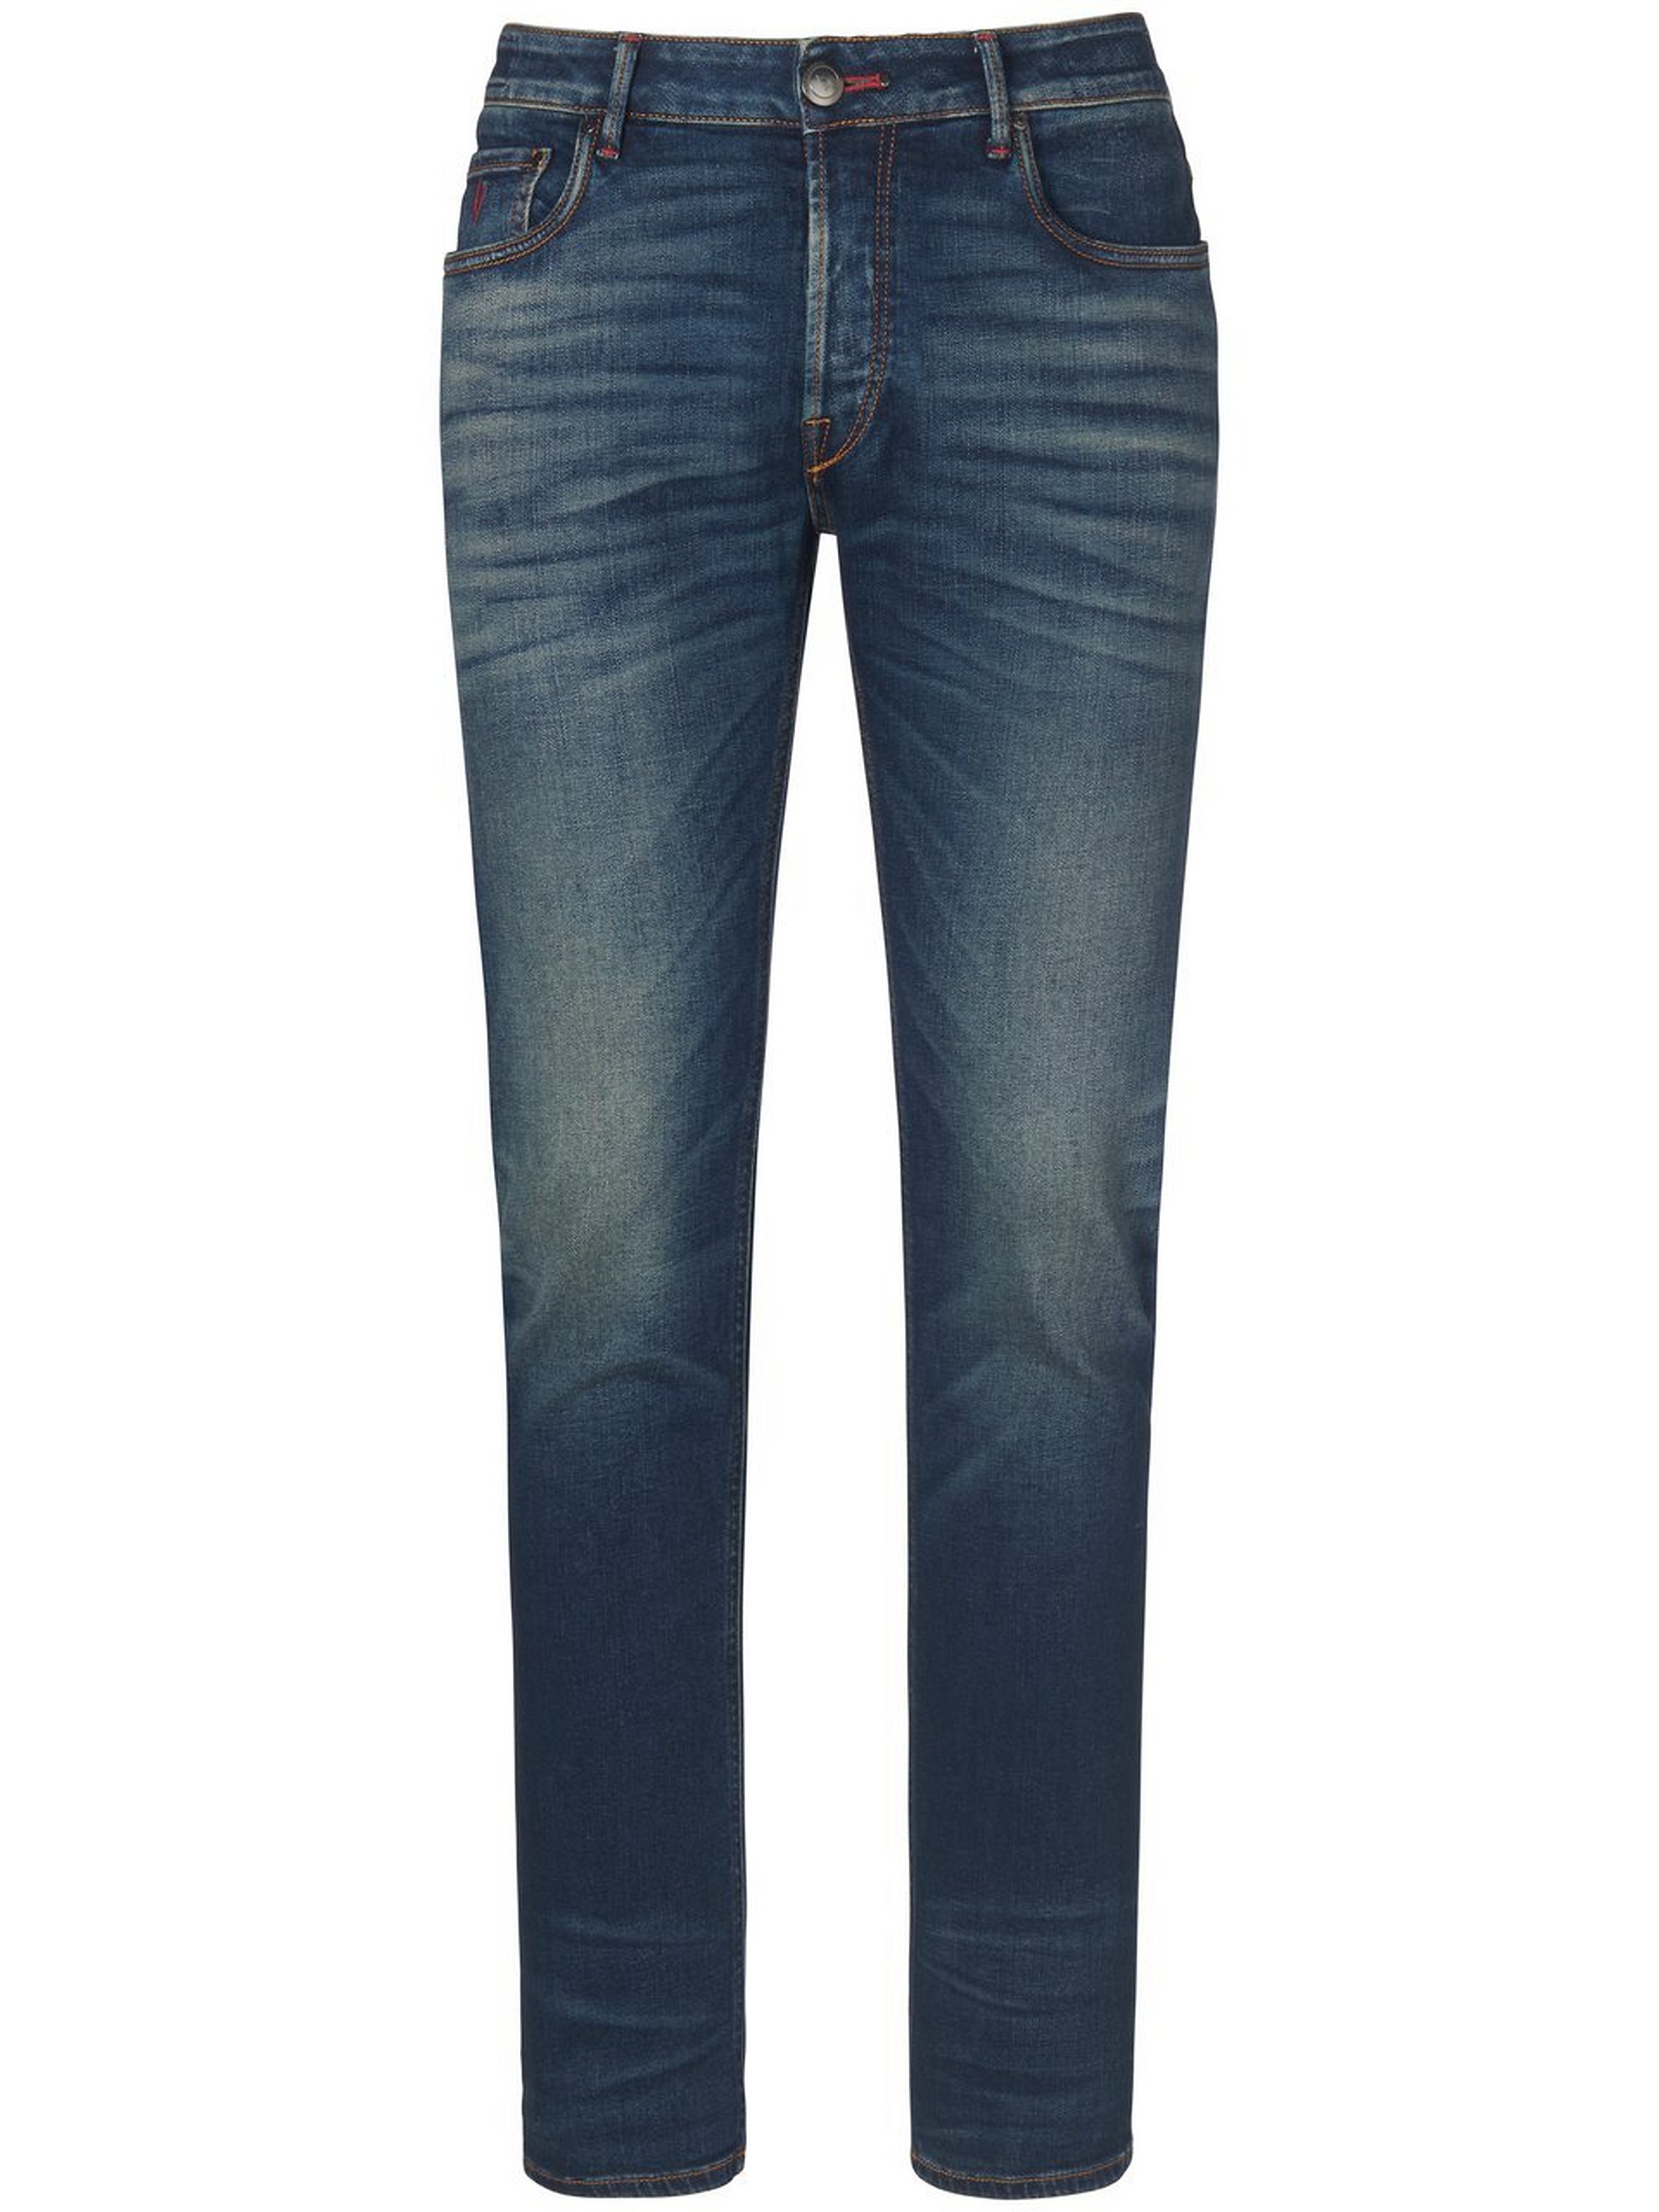 Jeans model Ravello Van Hand picked denim